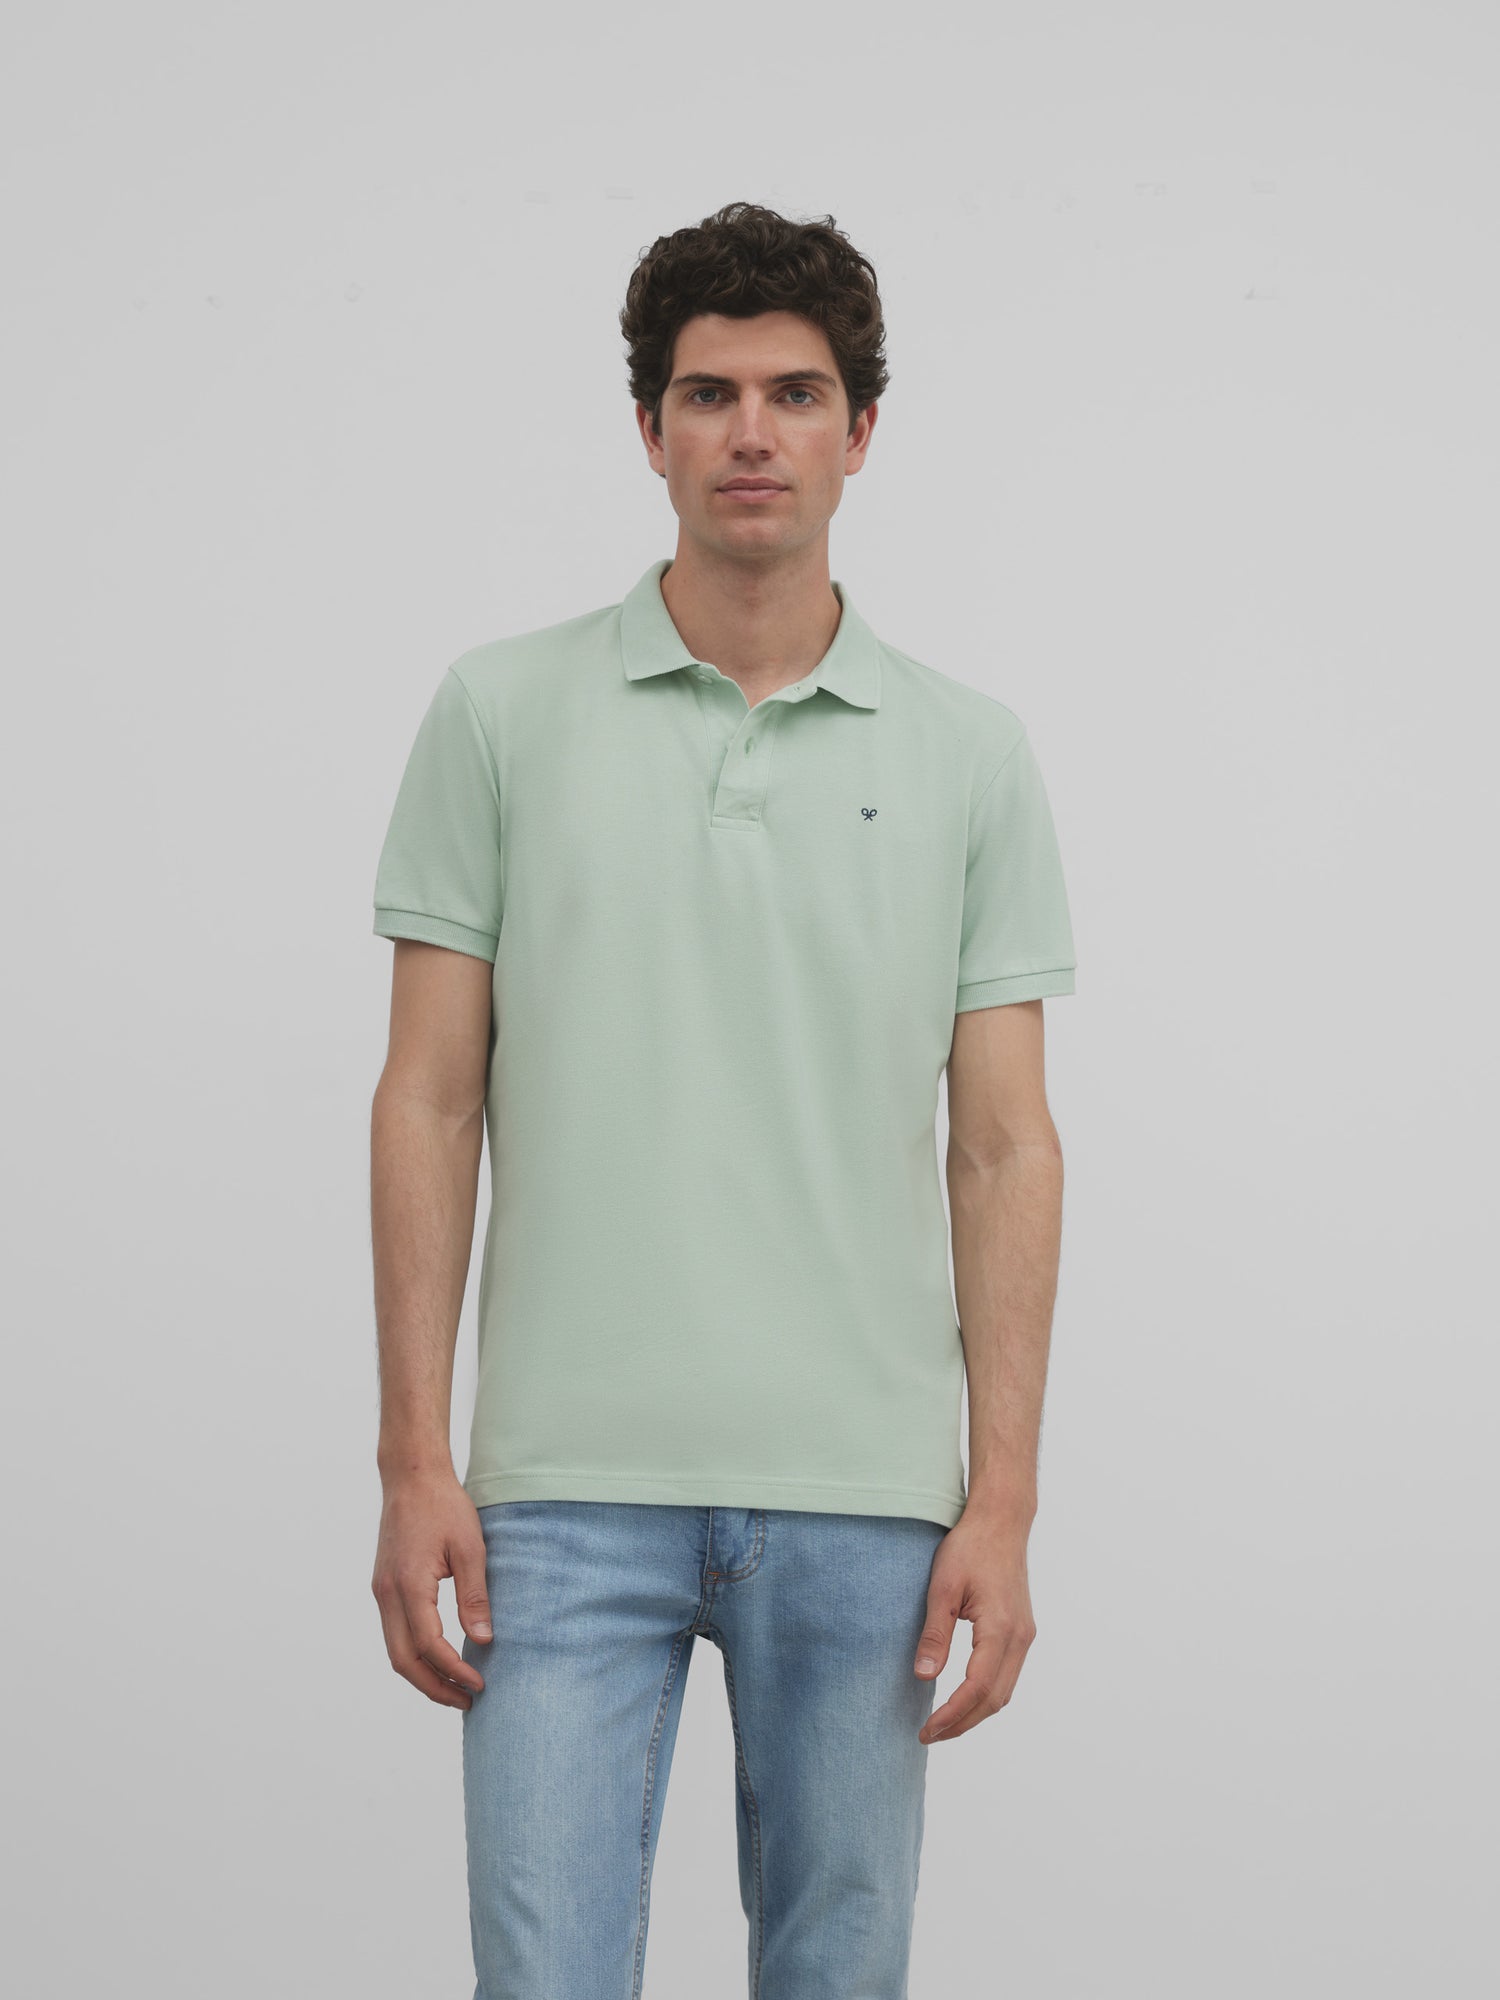 Classic plain light green polo shirt